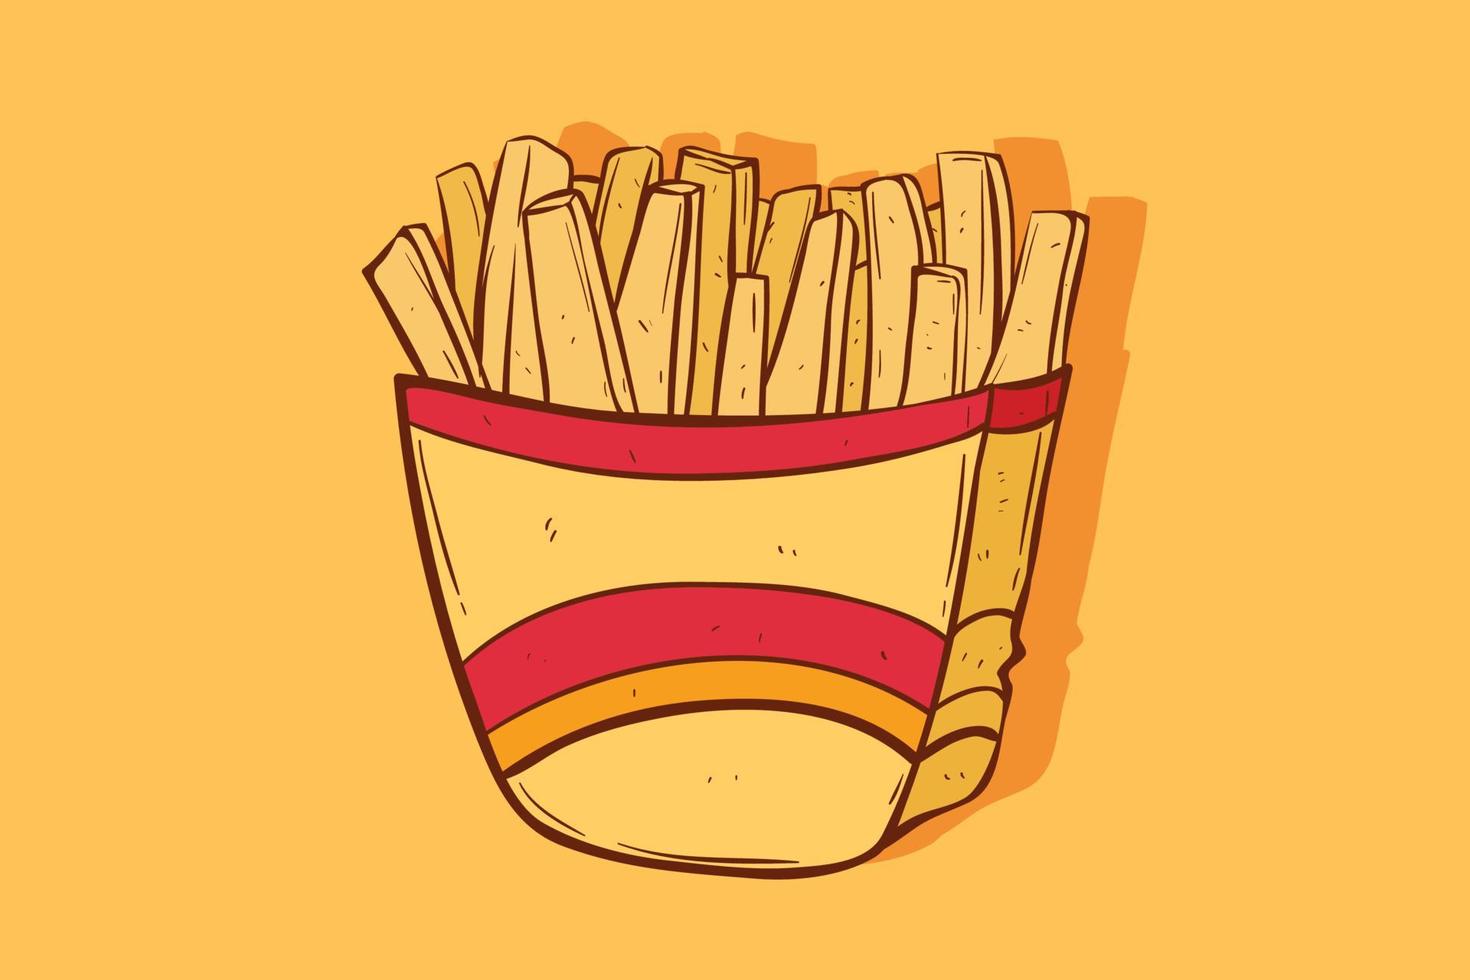 leckere pommes frites im handgezeichneten stil vektor